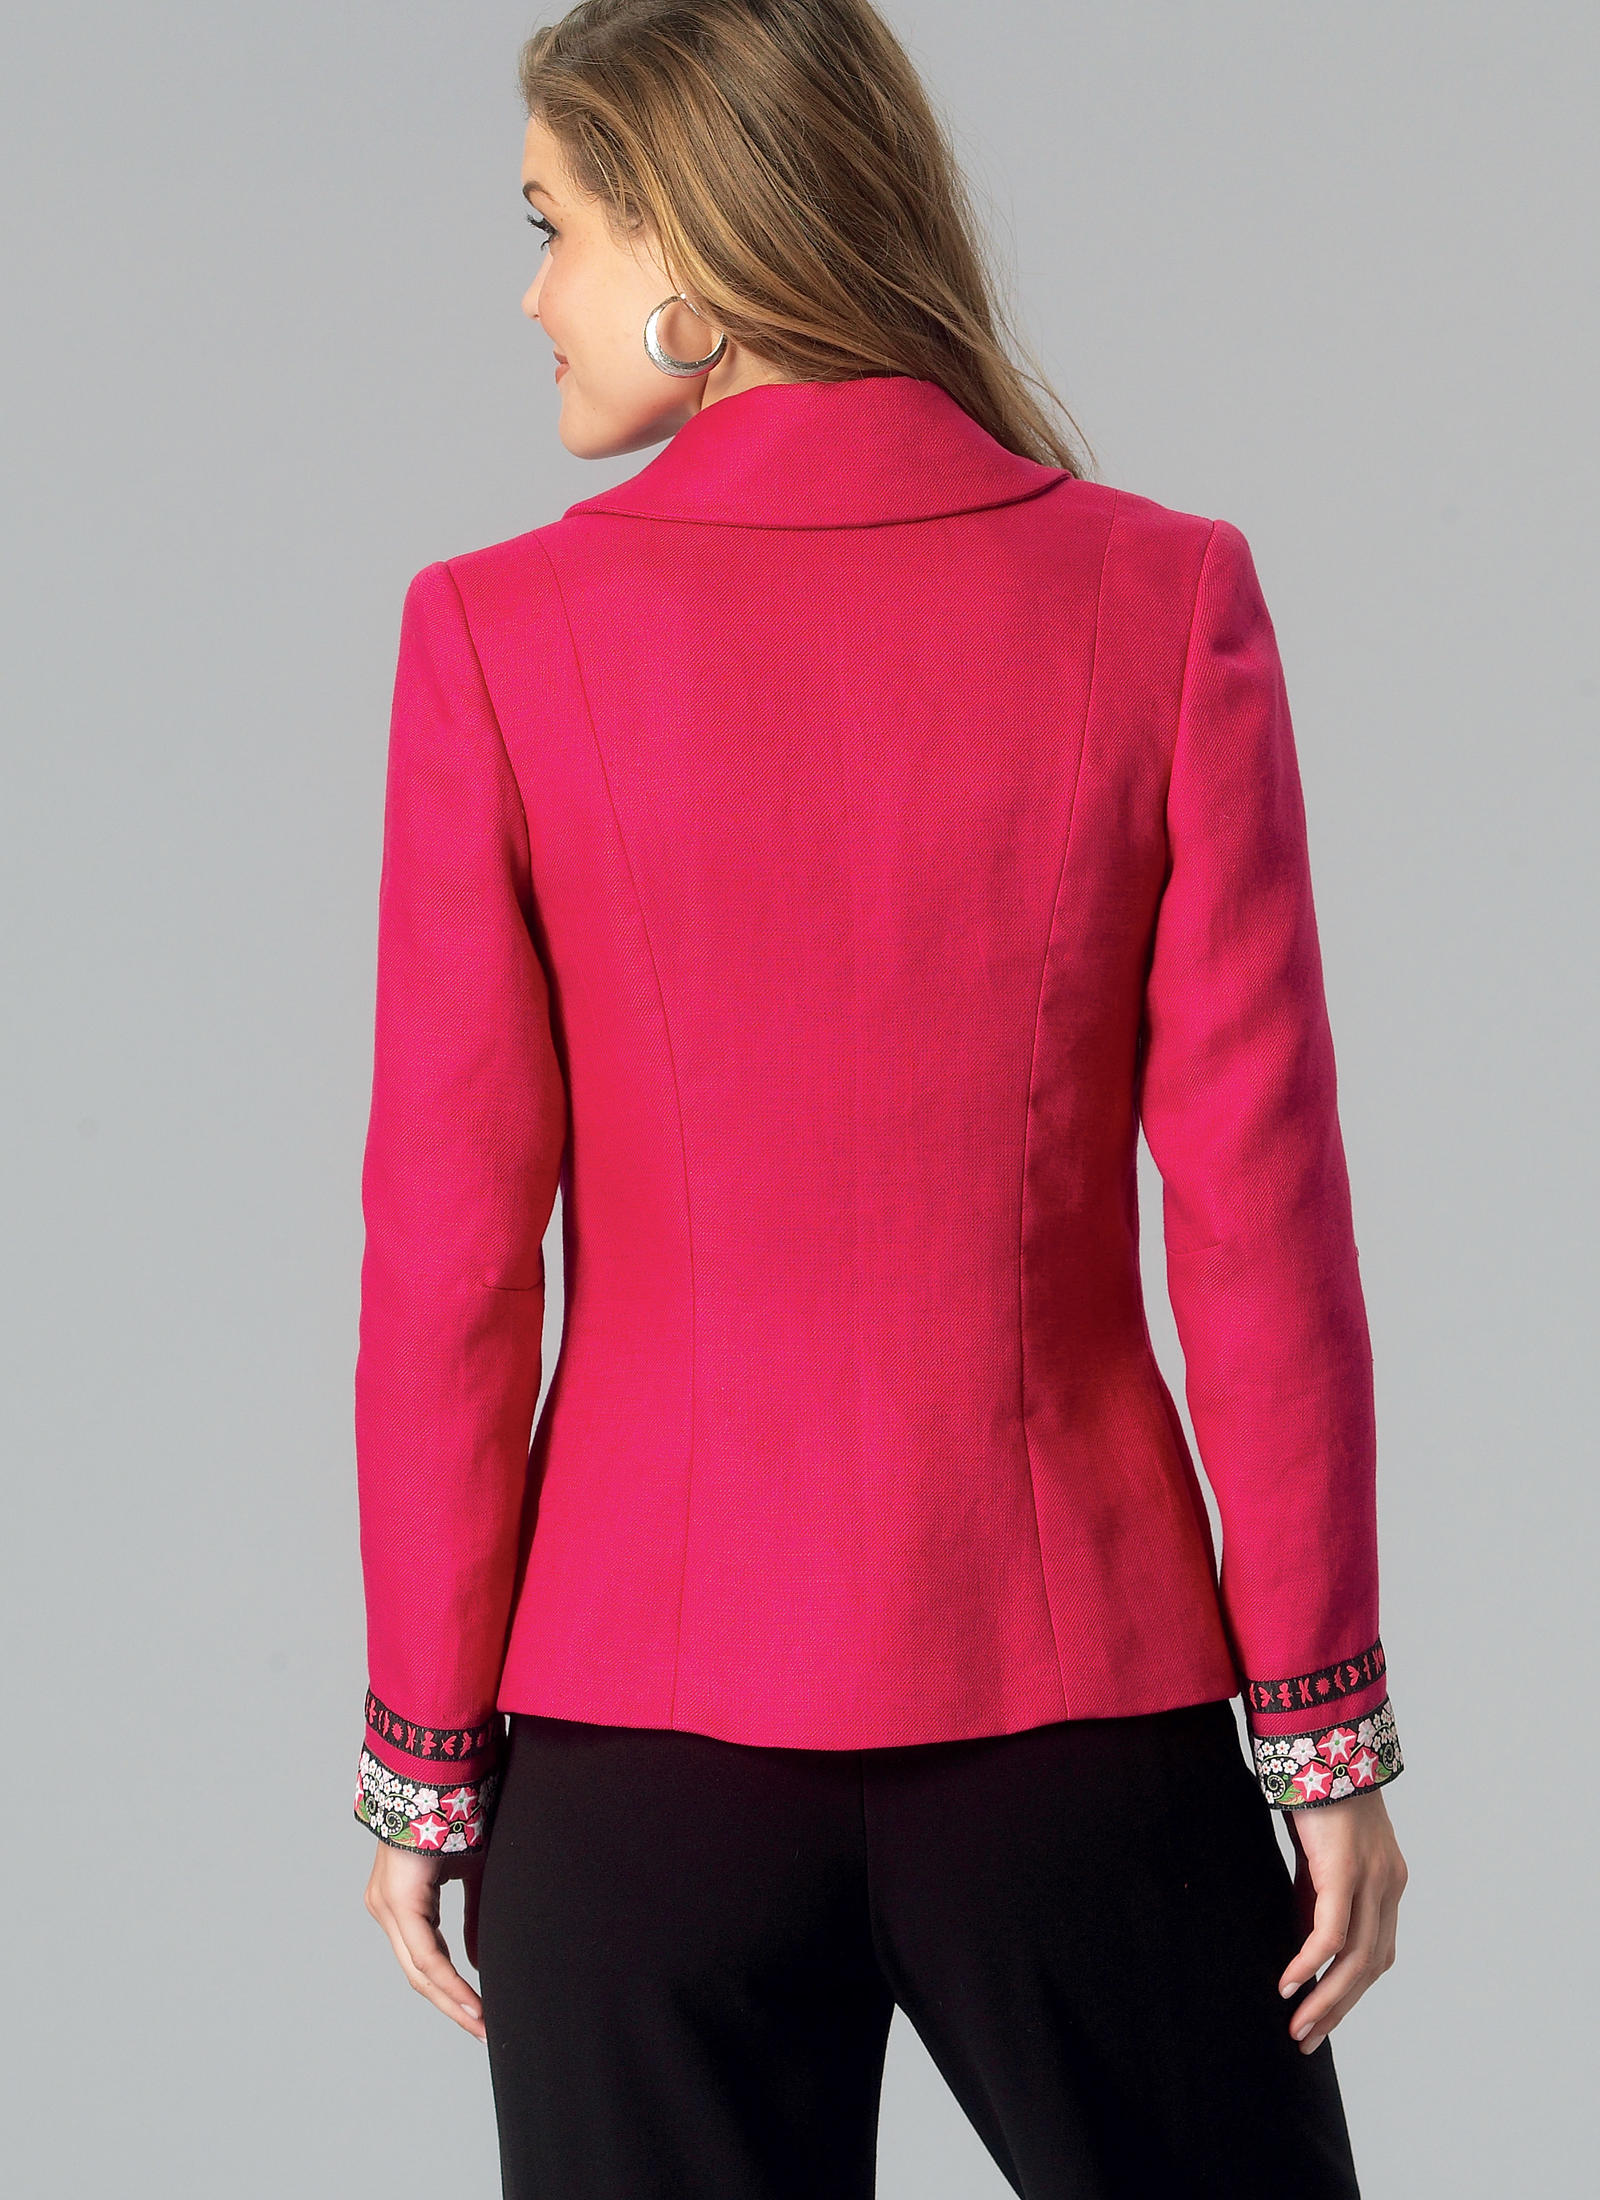 Back of a pink princess seam jacket